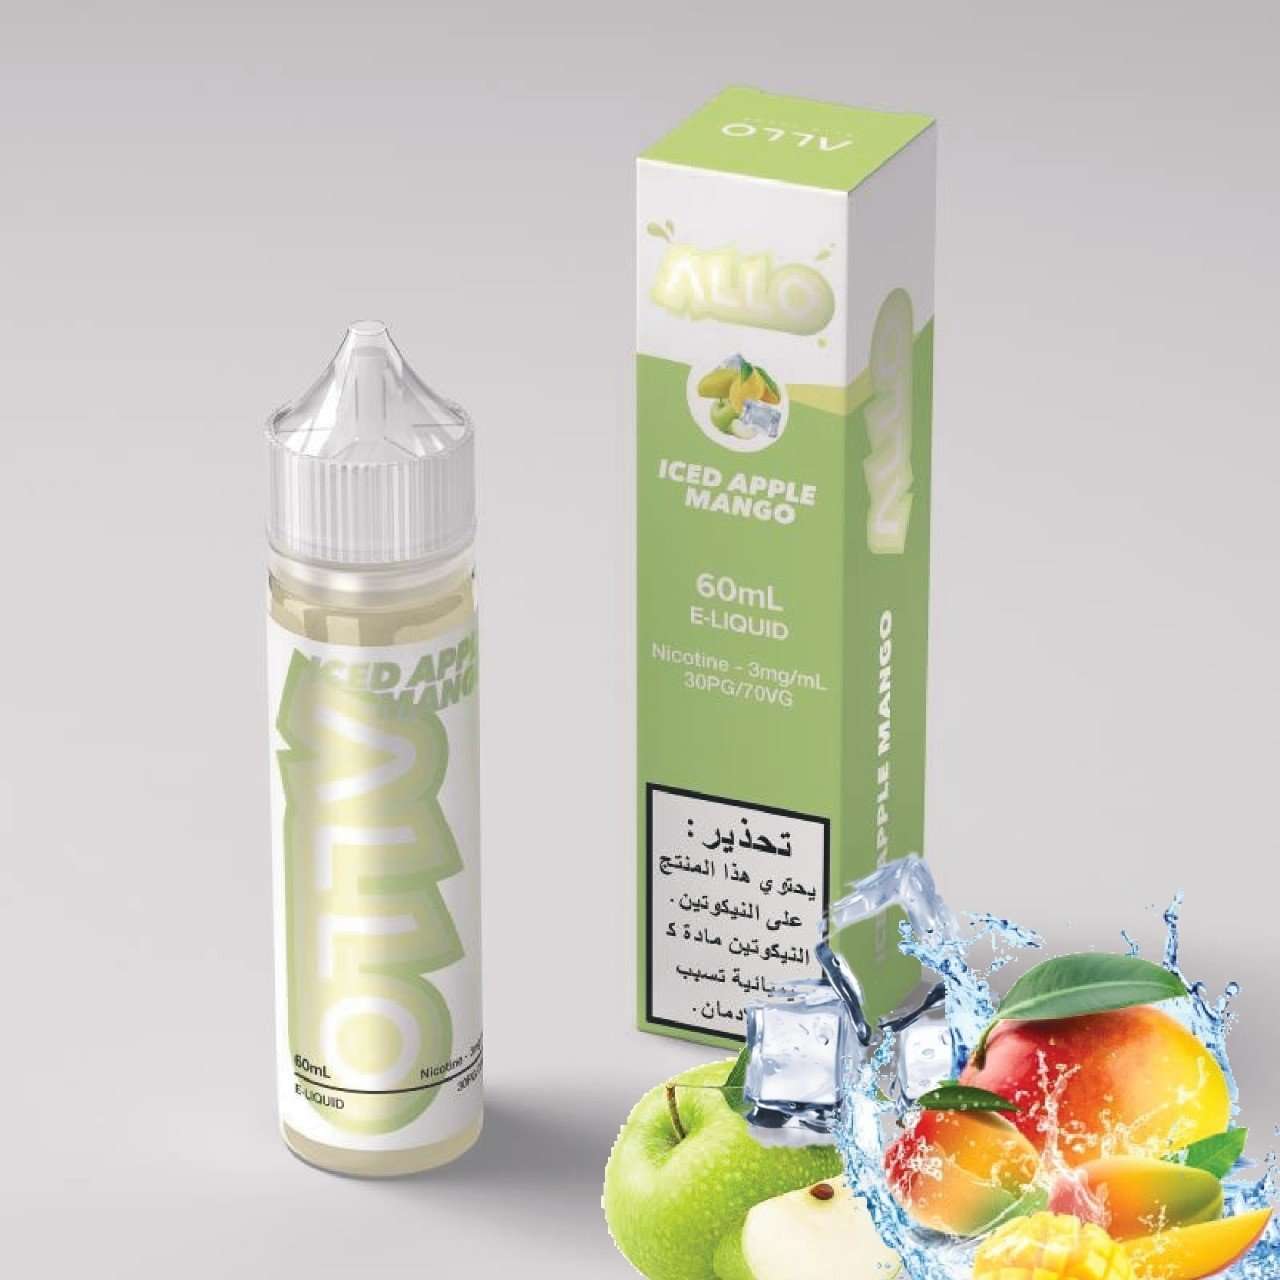 vape e liquid allo brand iced apple mango 60ml 3mg Vape Dubai | Buy Vape Online in UAE - SmokeFree